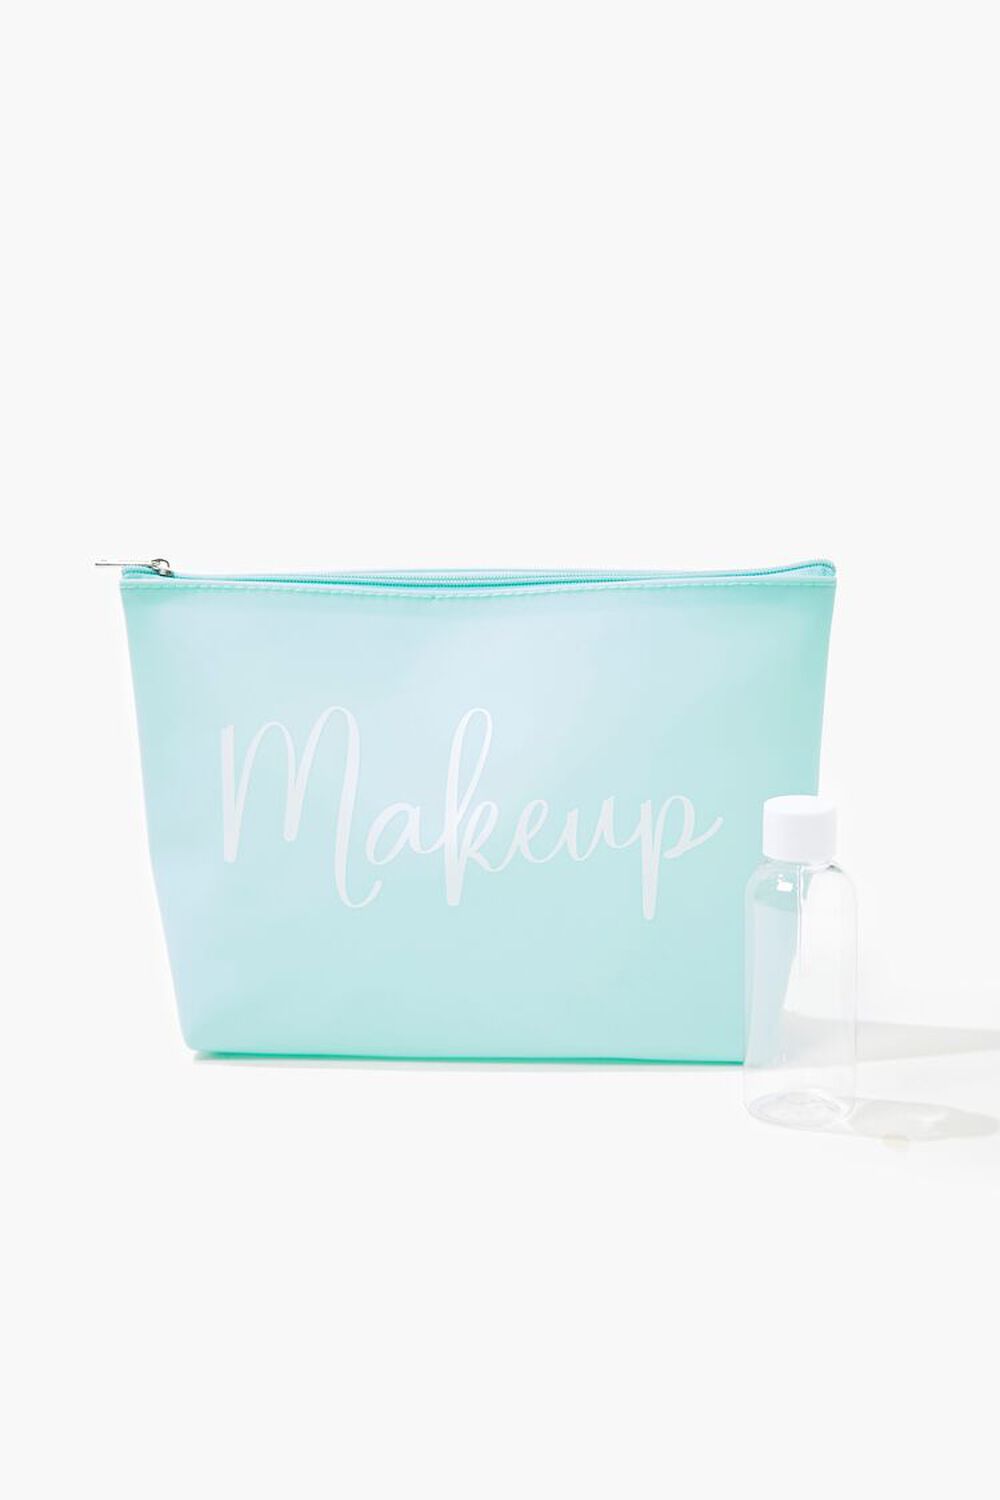 MINT Makeup Graphic Bag & Travel Bottle Set, image 1